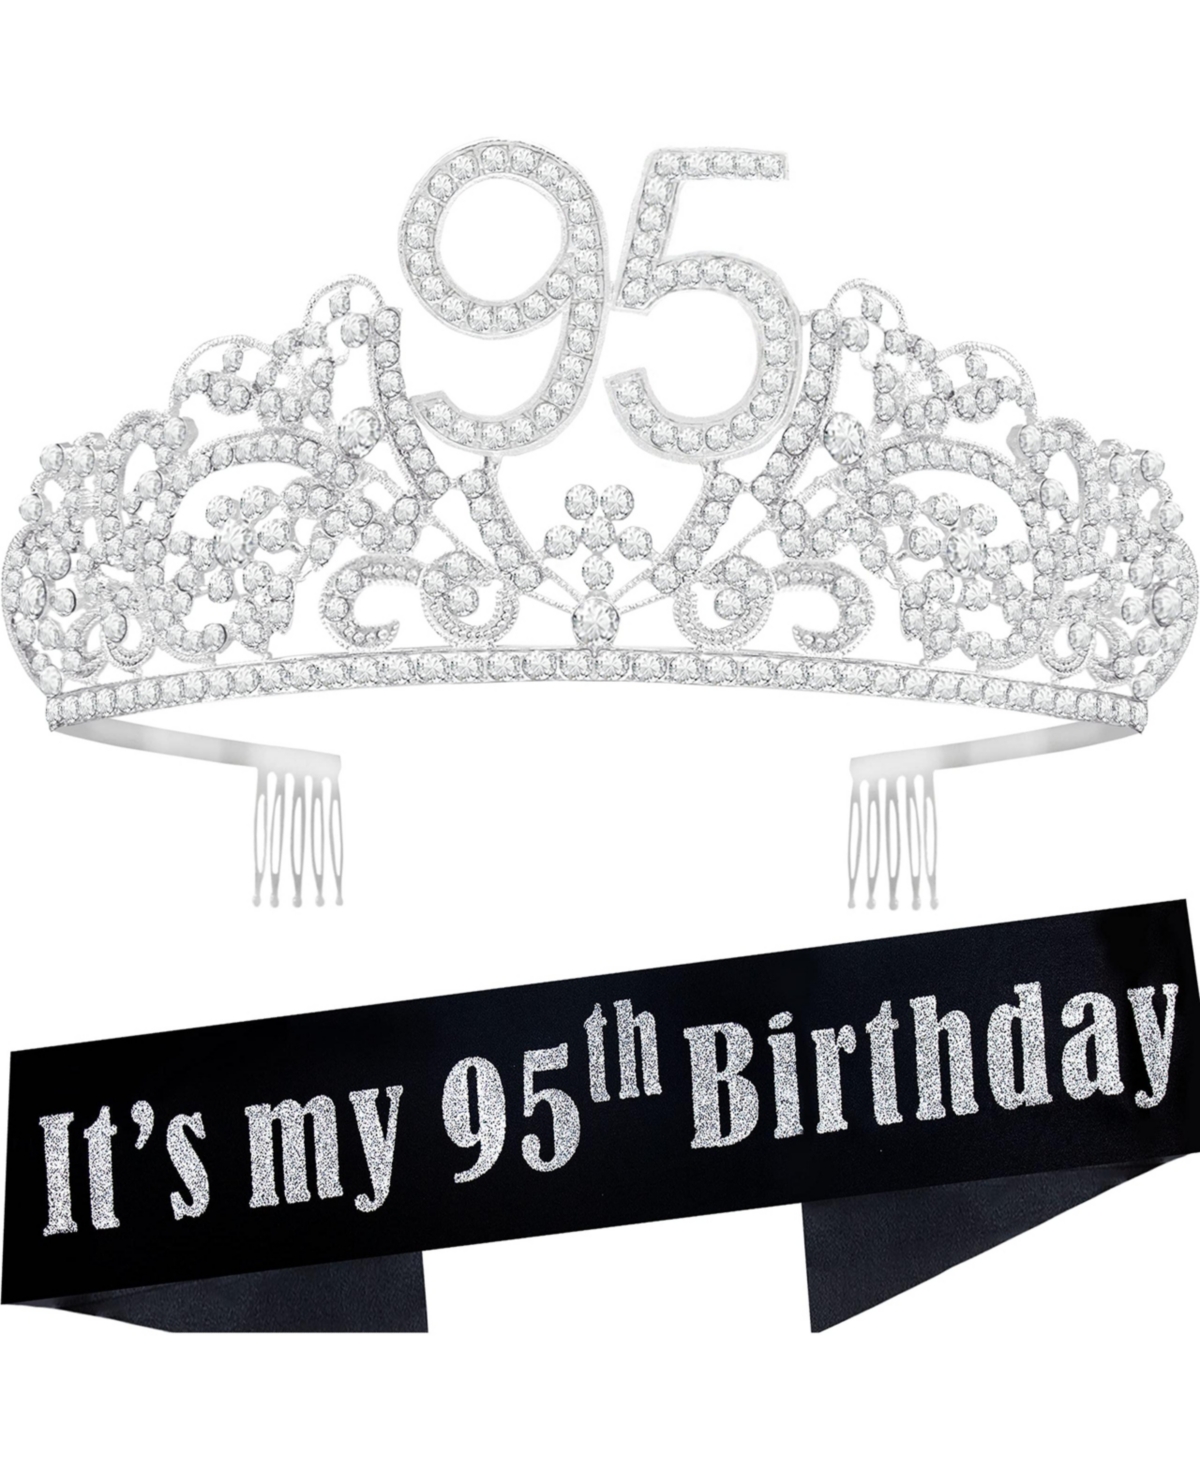 95th Birthday Sash and Tiara for Women - Glitter Sash with Flowers and Rhinestone Silver Metal Tiara, Perfect for 95th Birthday Celebration